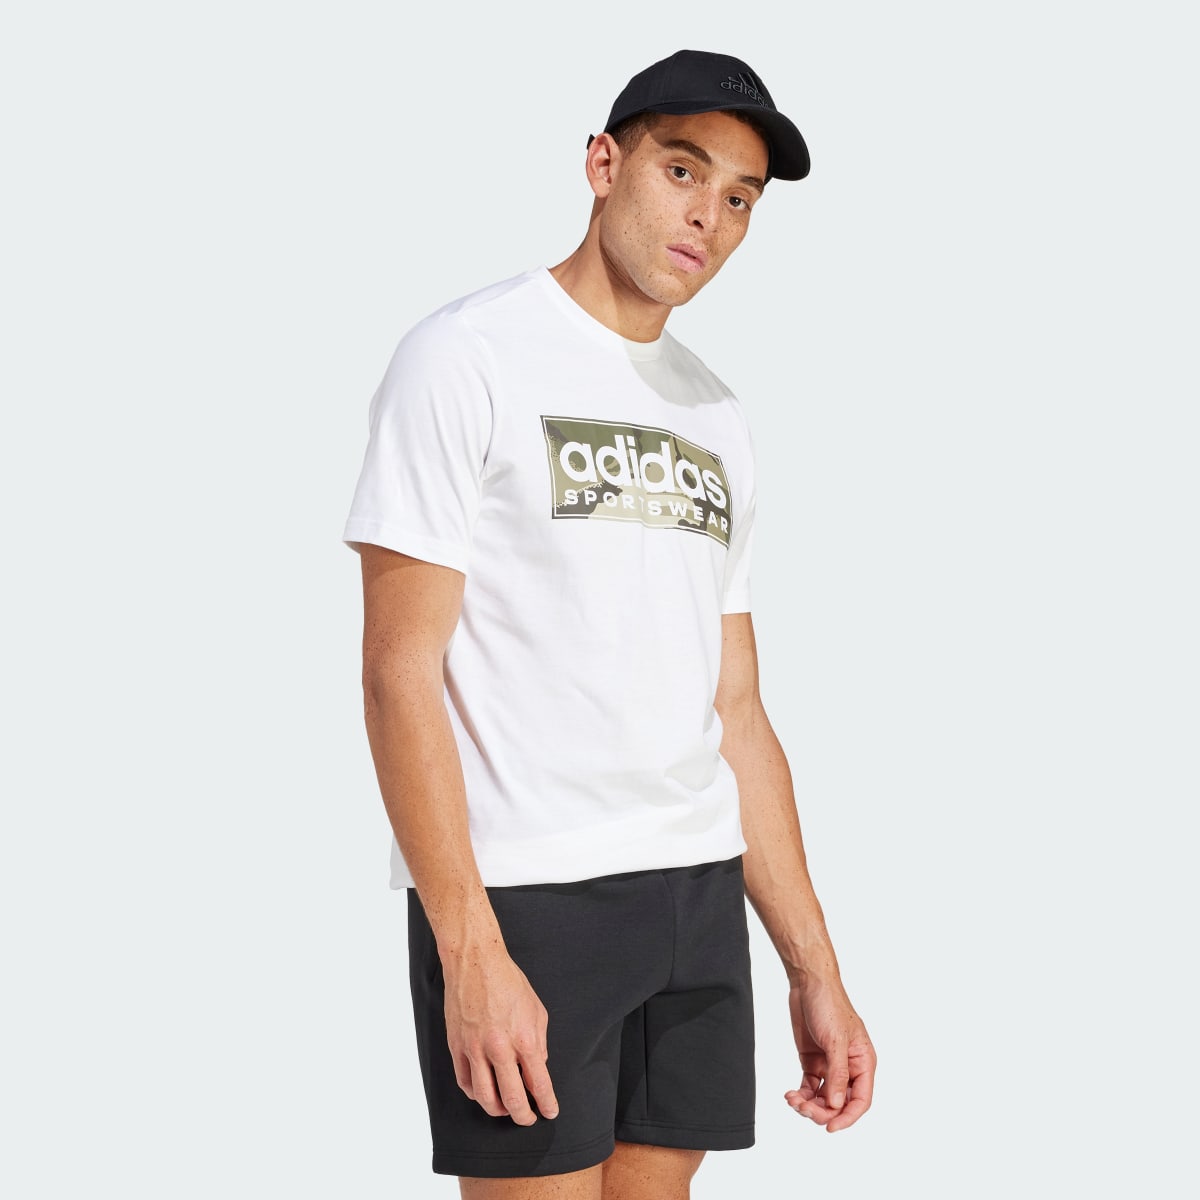 Adidas Camo Linear Graphic T-Shirt. 4